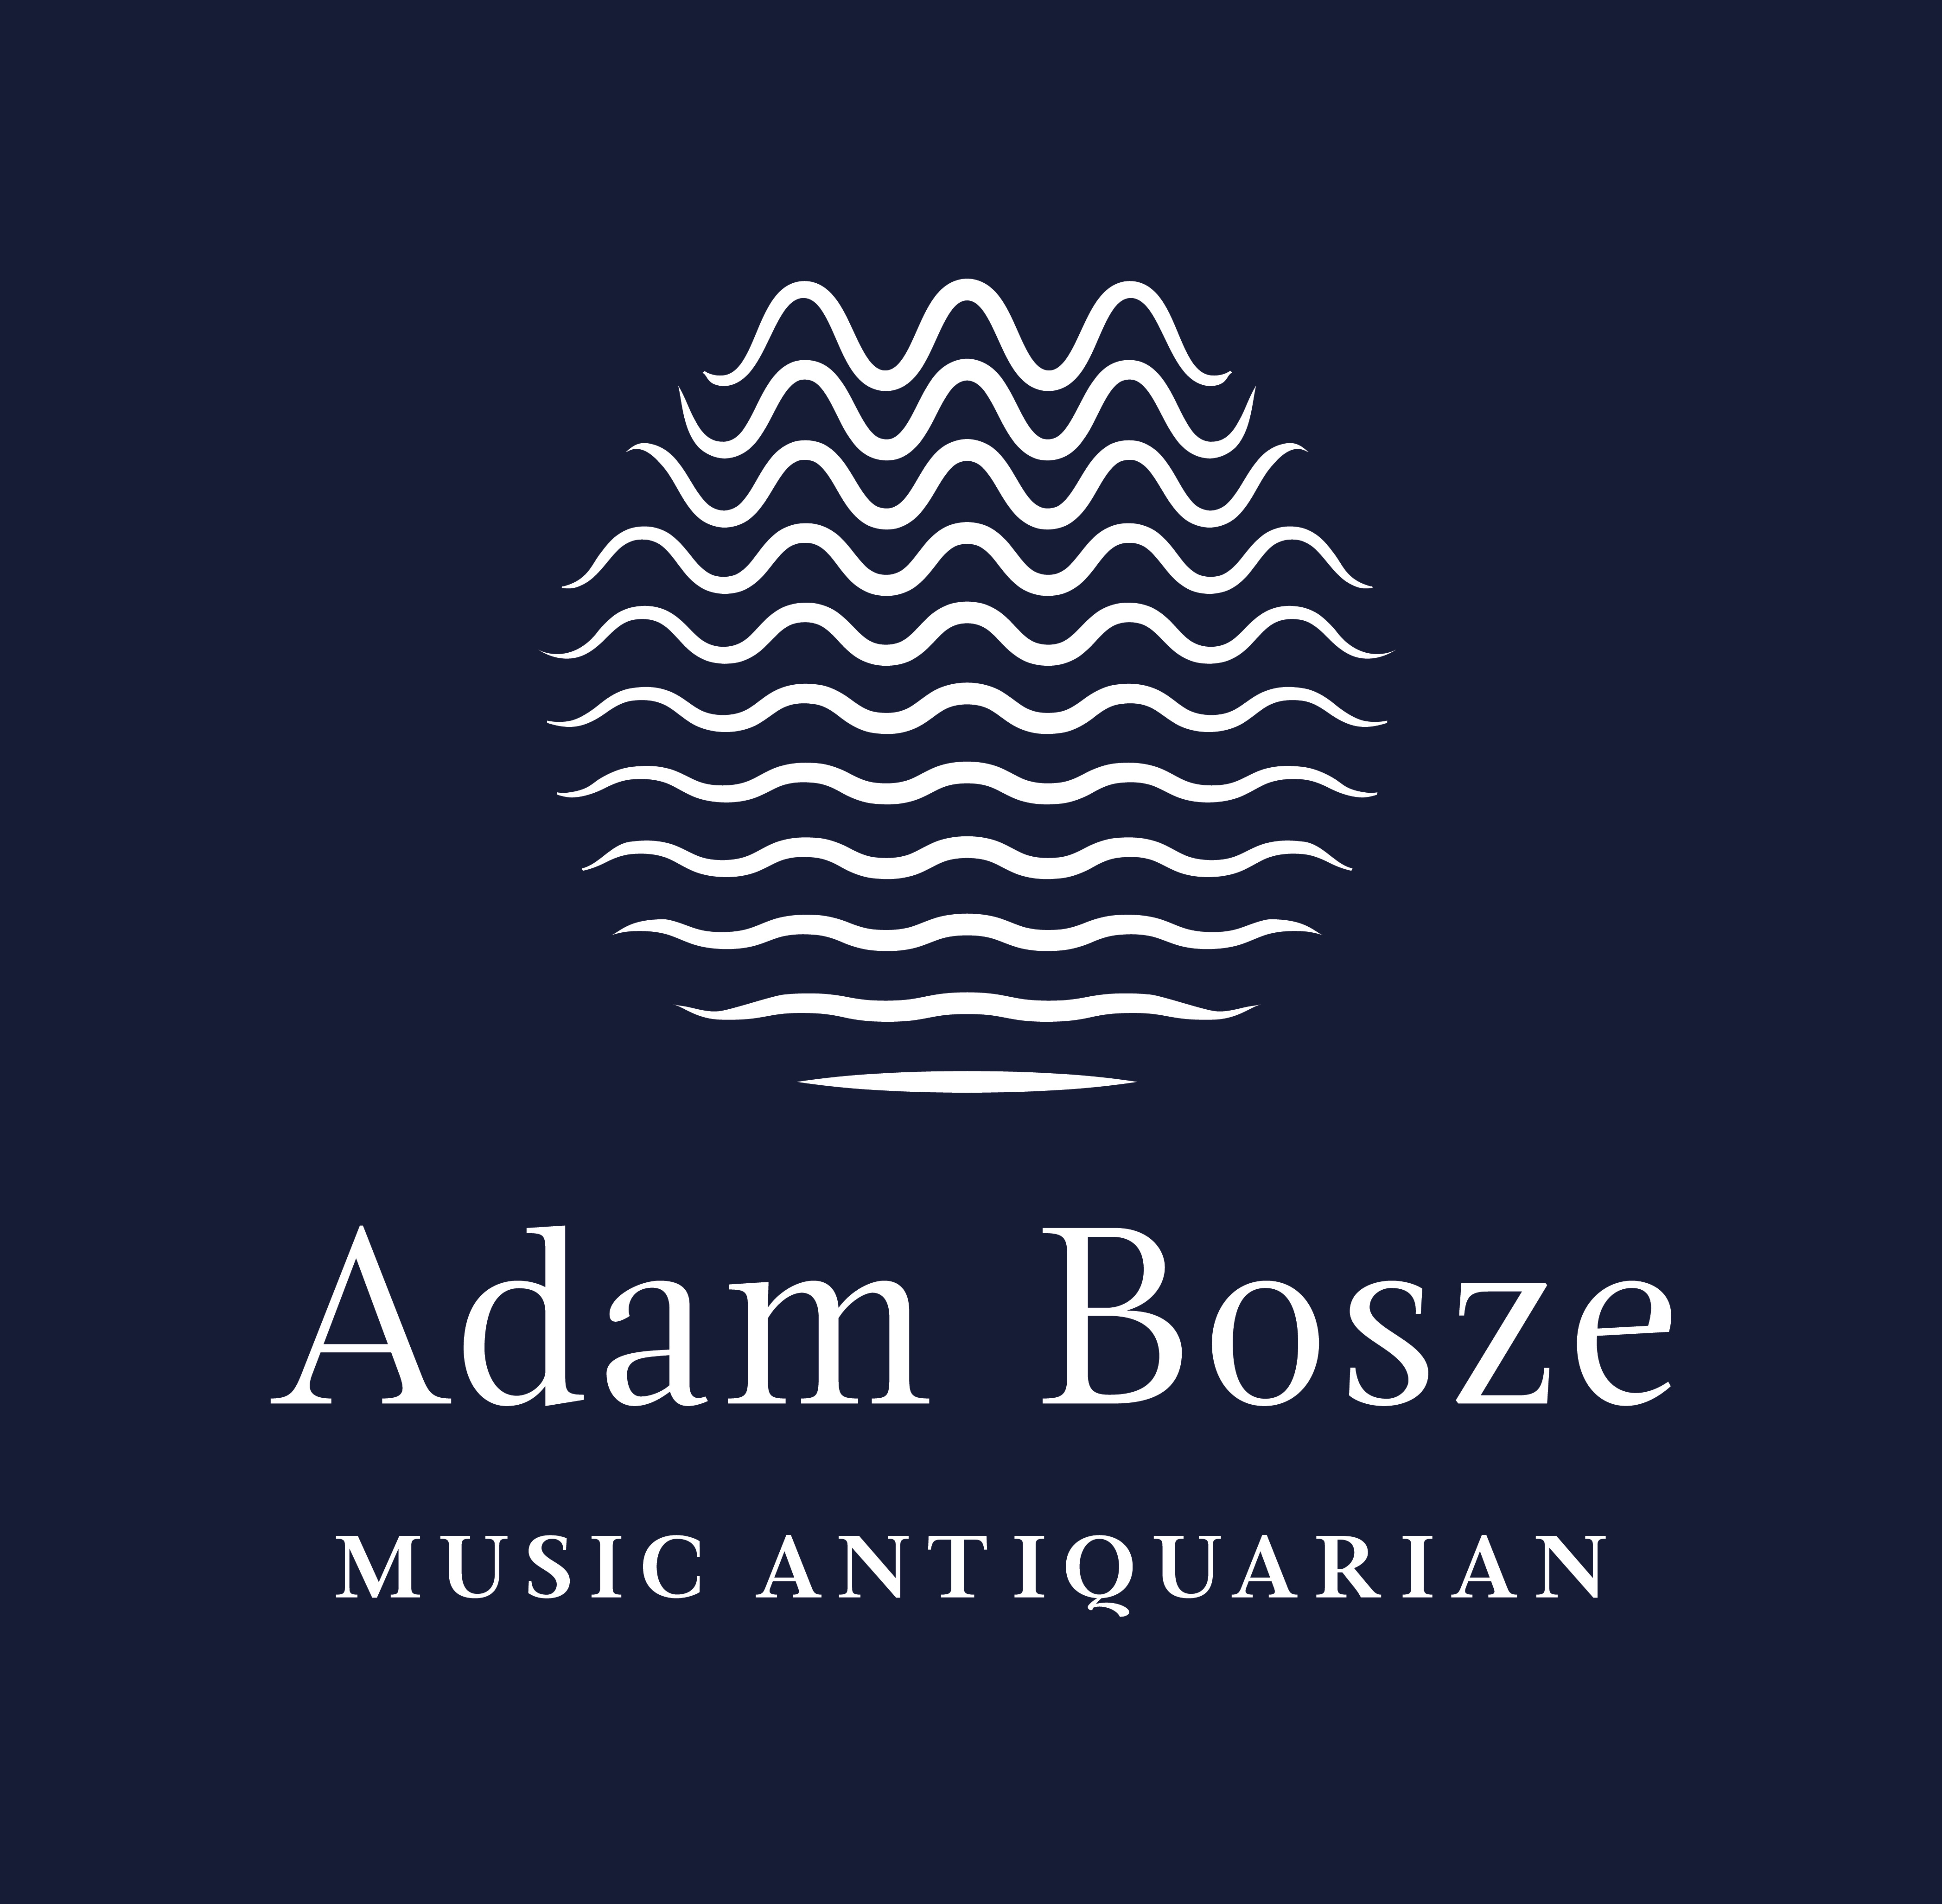 Bosze Adam Zenei Antikvarium / Adam Bosze Music Antiquarian